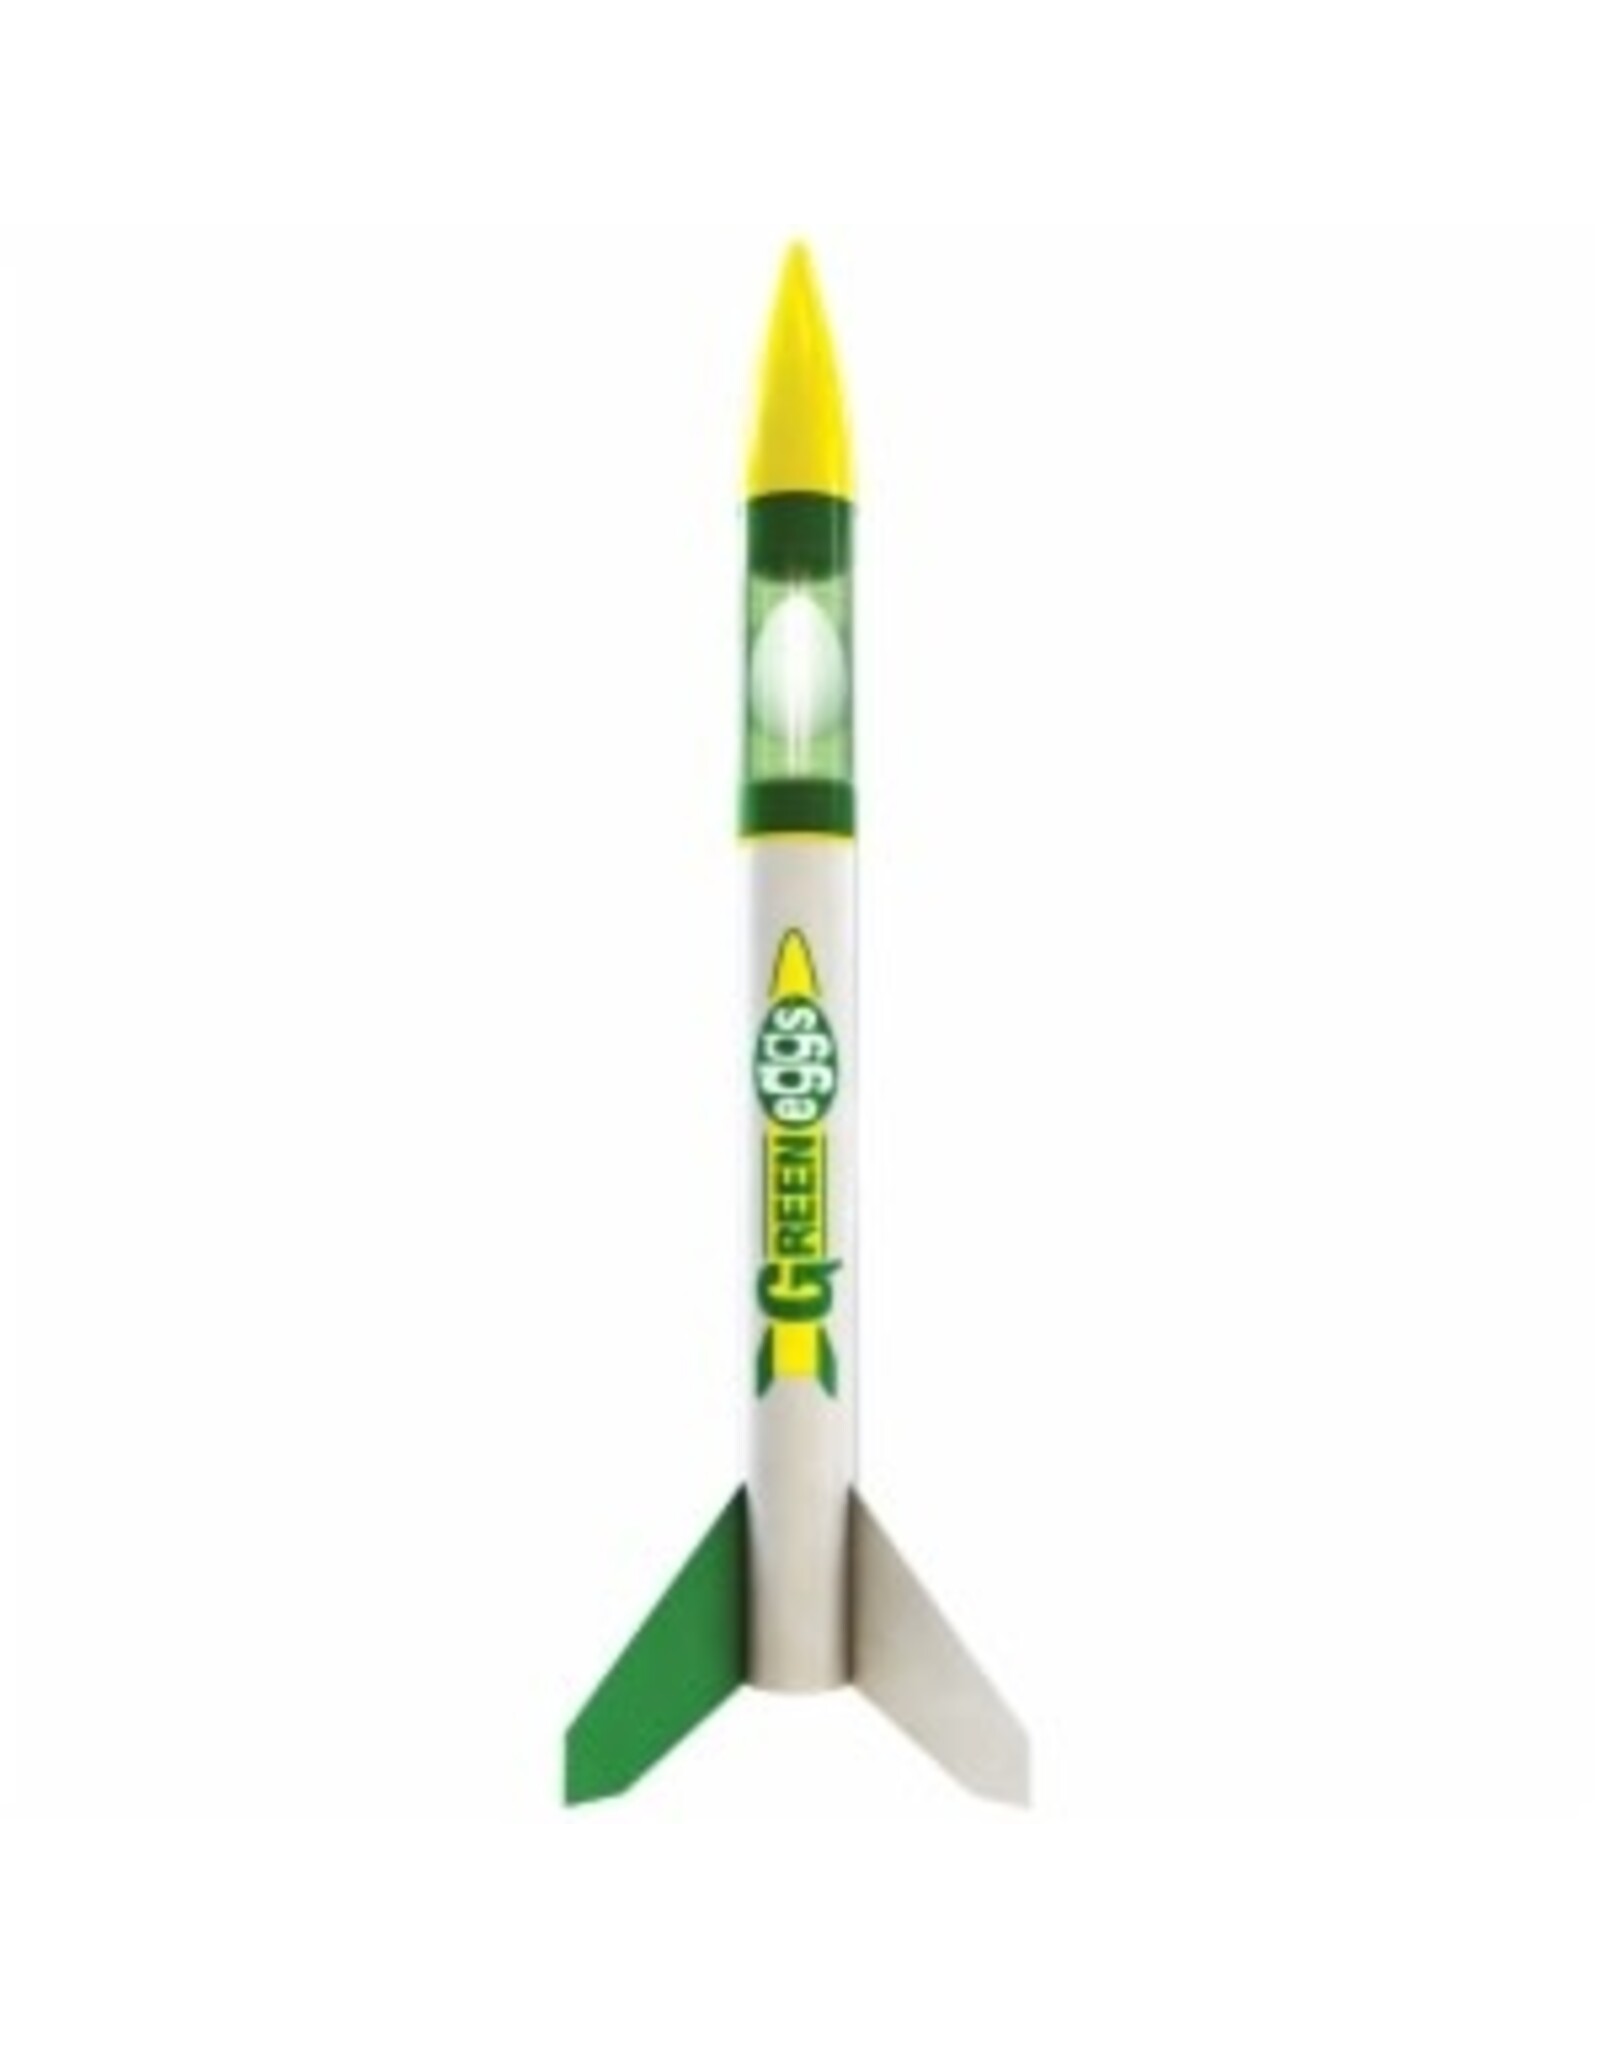 Estes Green Eggs - Intermediate Skill Rocket Kit (D engine)